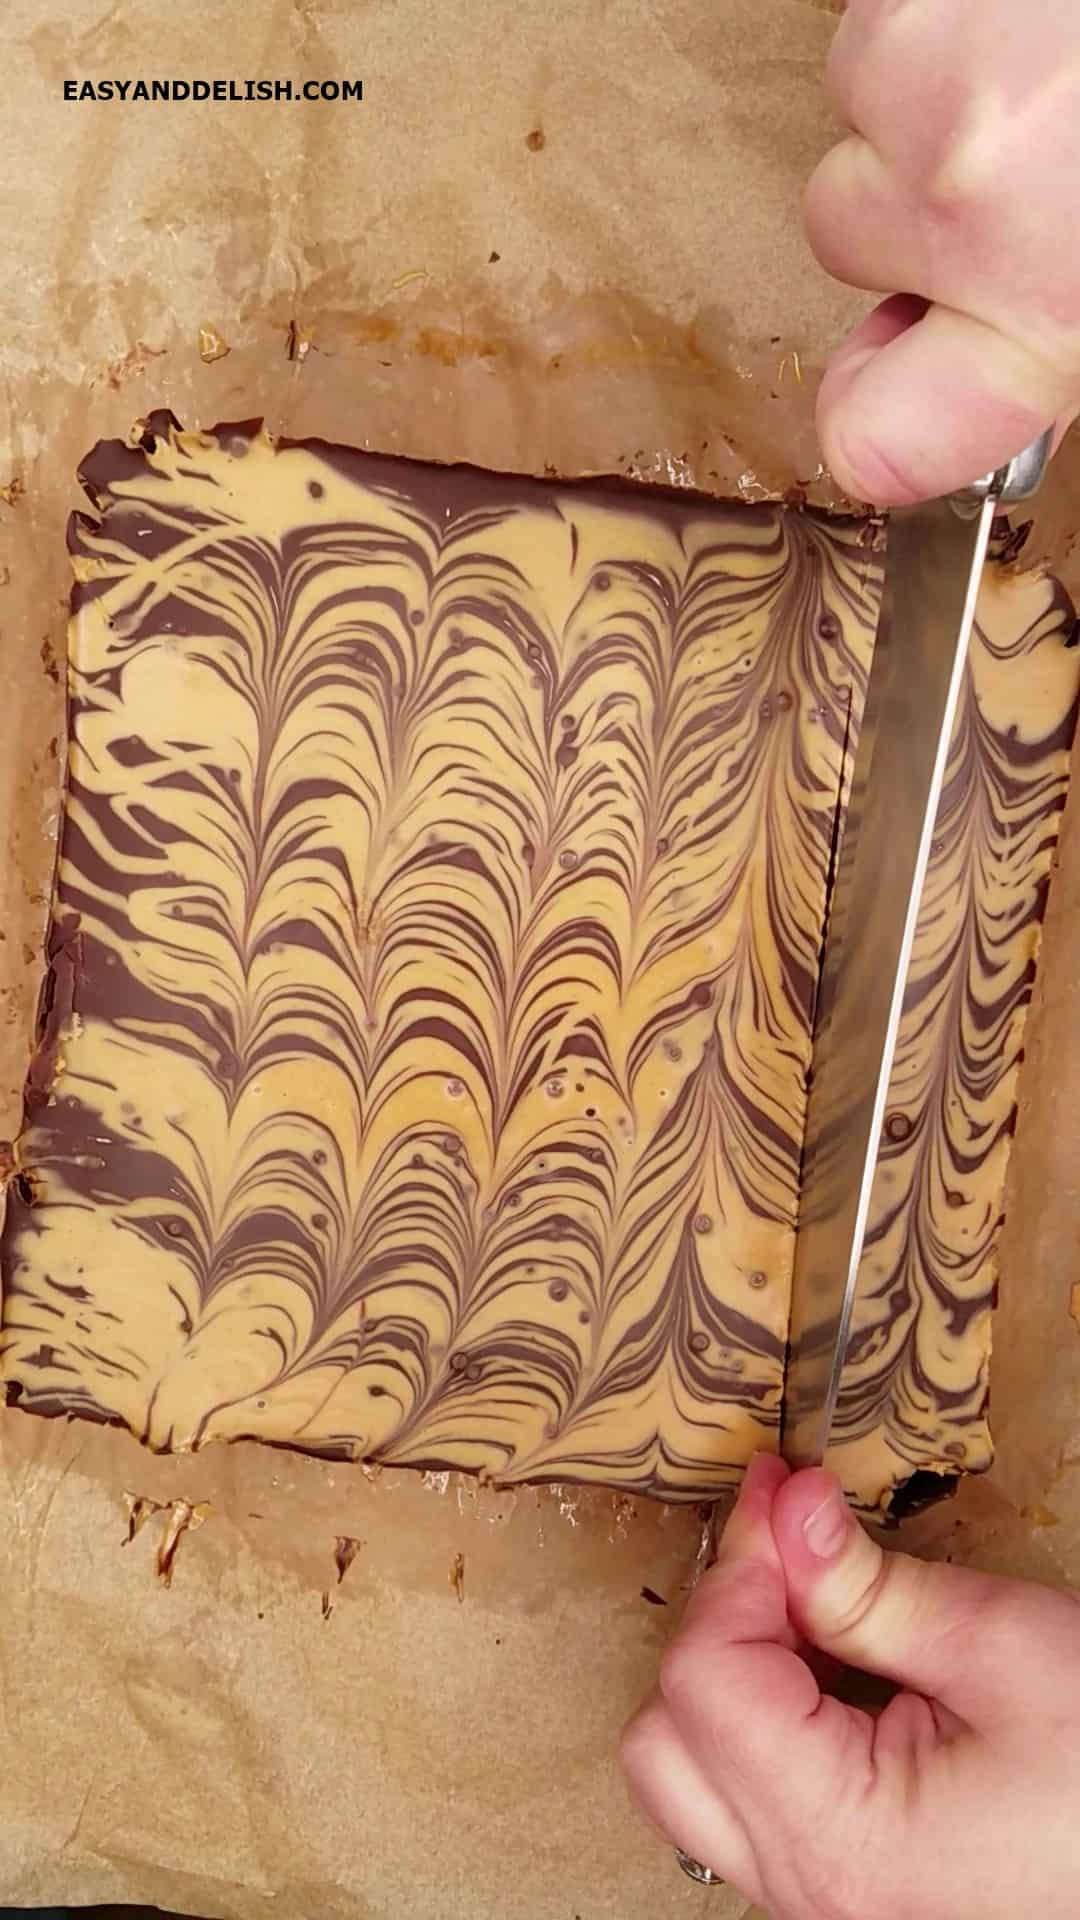 Slicing no-bake chocolate peanut butter crunch bars.